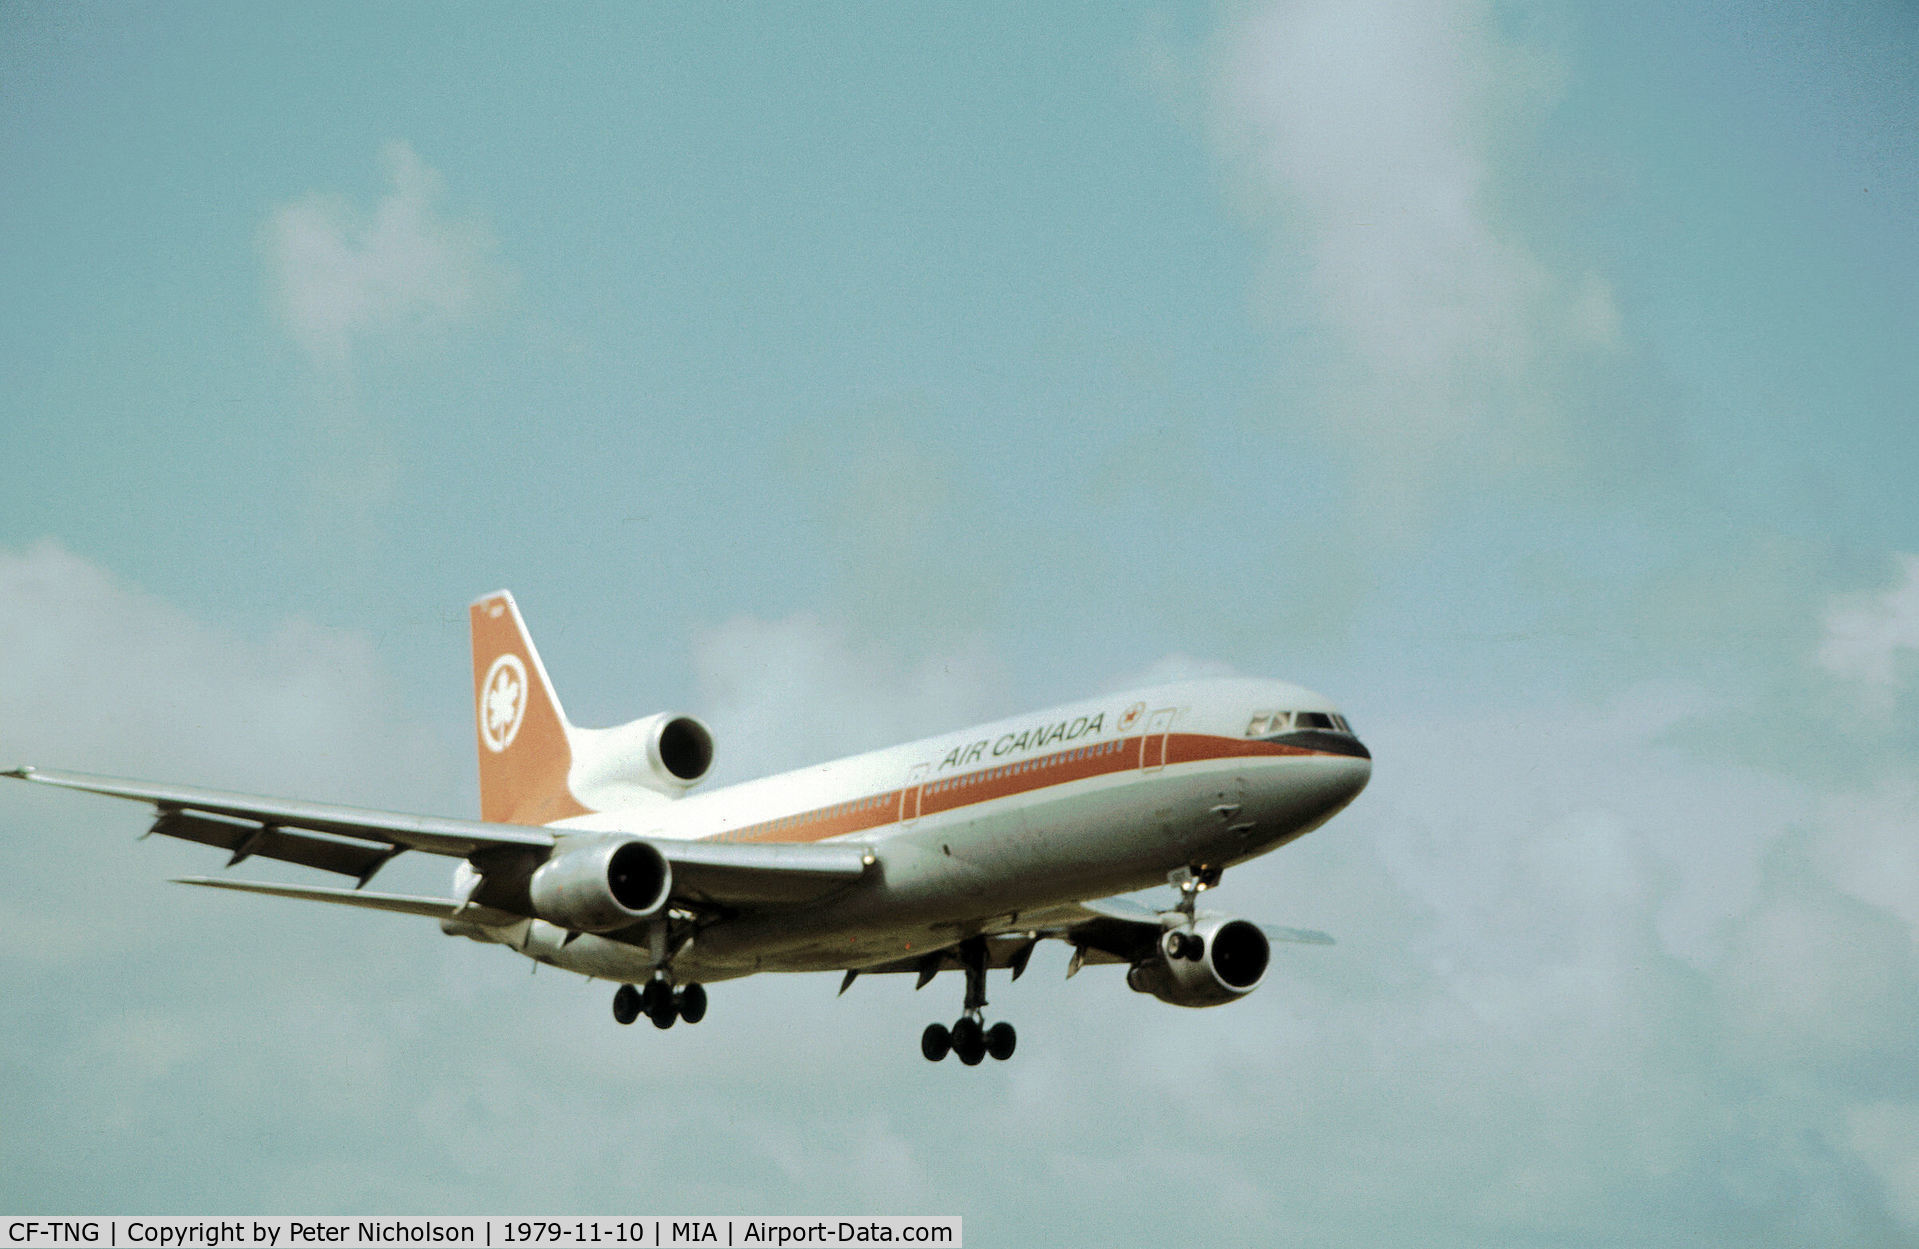 CF-TNG, 1973 Lockheed L-1011-385-1 TriStar 1 C/N 193E-1048, Lockheed TriStar of Air Canada on final approach to Miami in November 1979.